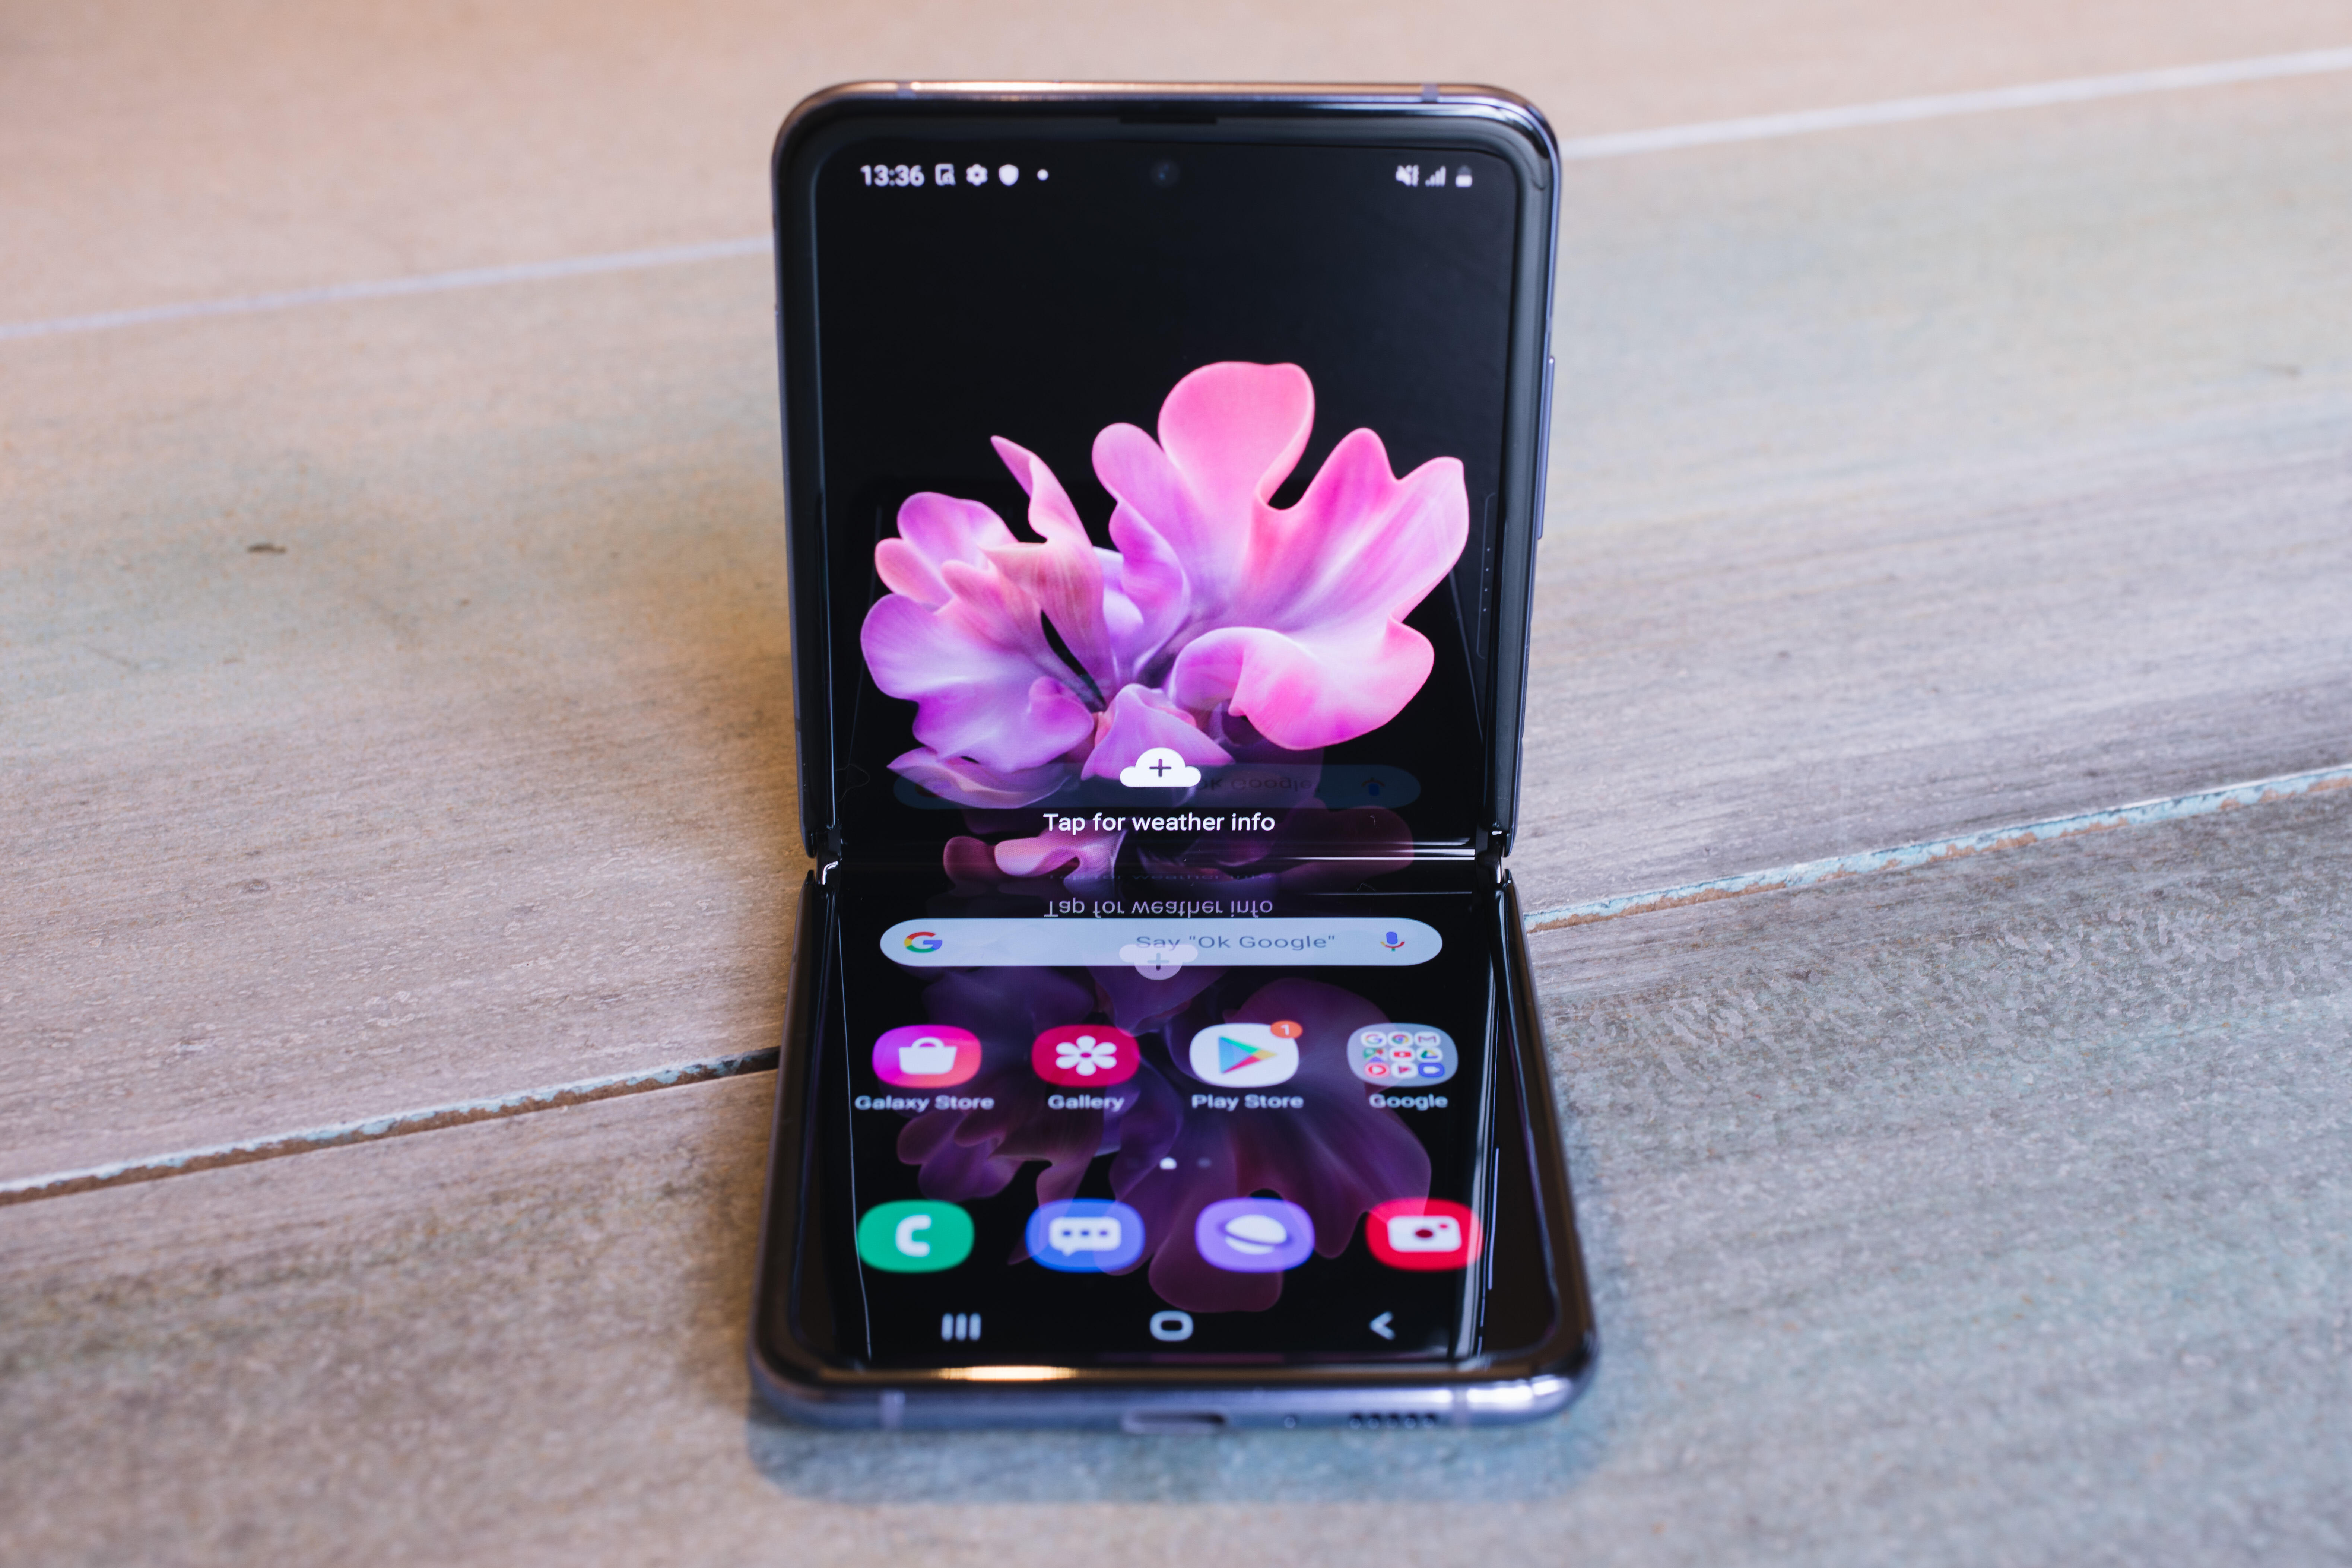 Самсунг большой экран раскладной. Samsung Galaxy aesthetic. Складной телефон Оппо Файн н1 флип. Самсунг раскладной новый с большим экраном цена. Фото андроид раскладушка 2020 года цена.